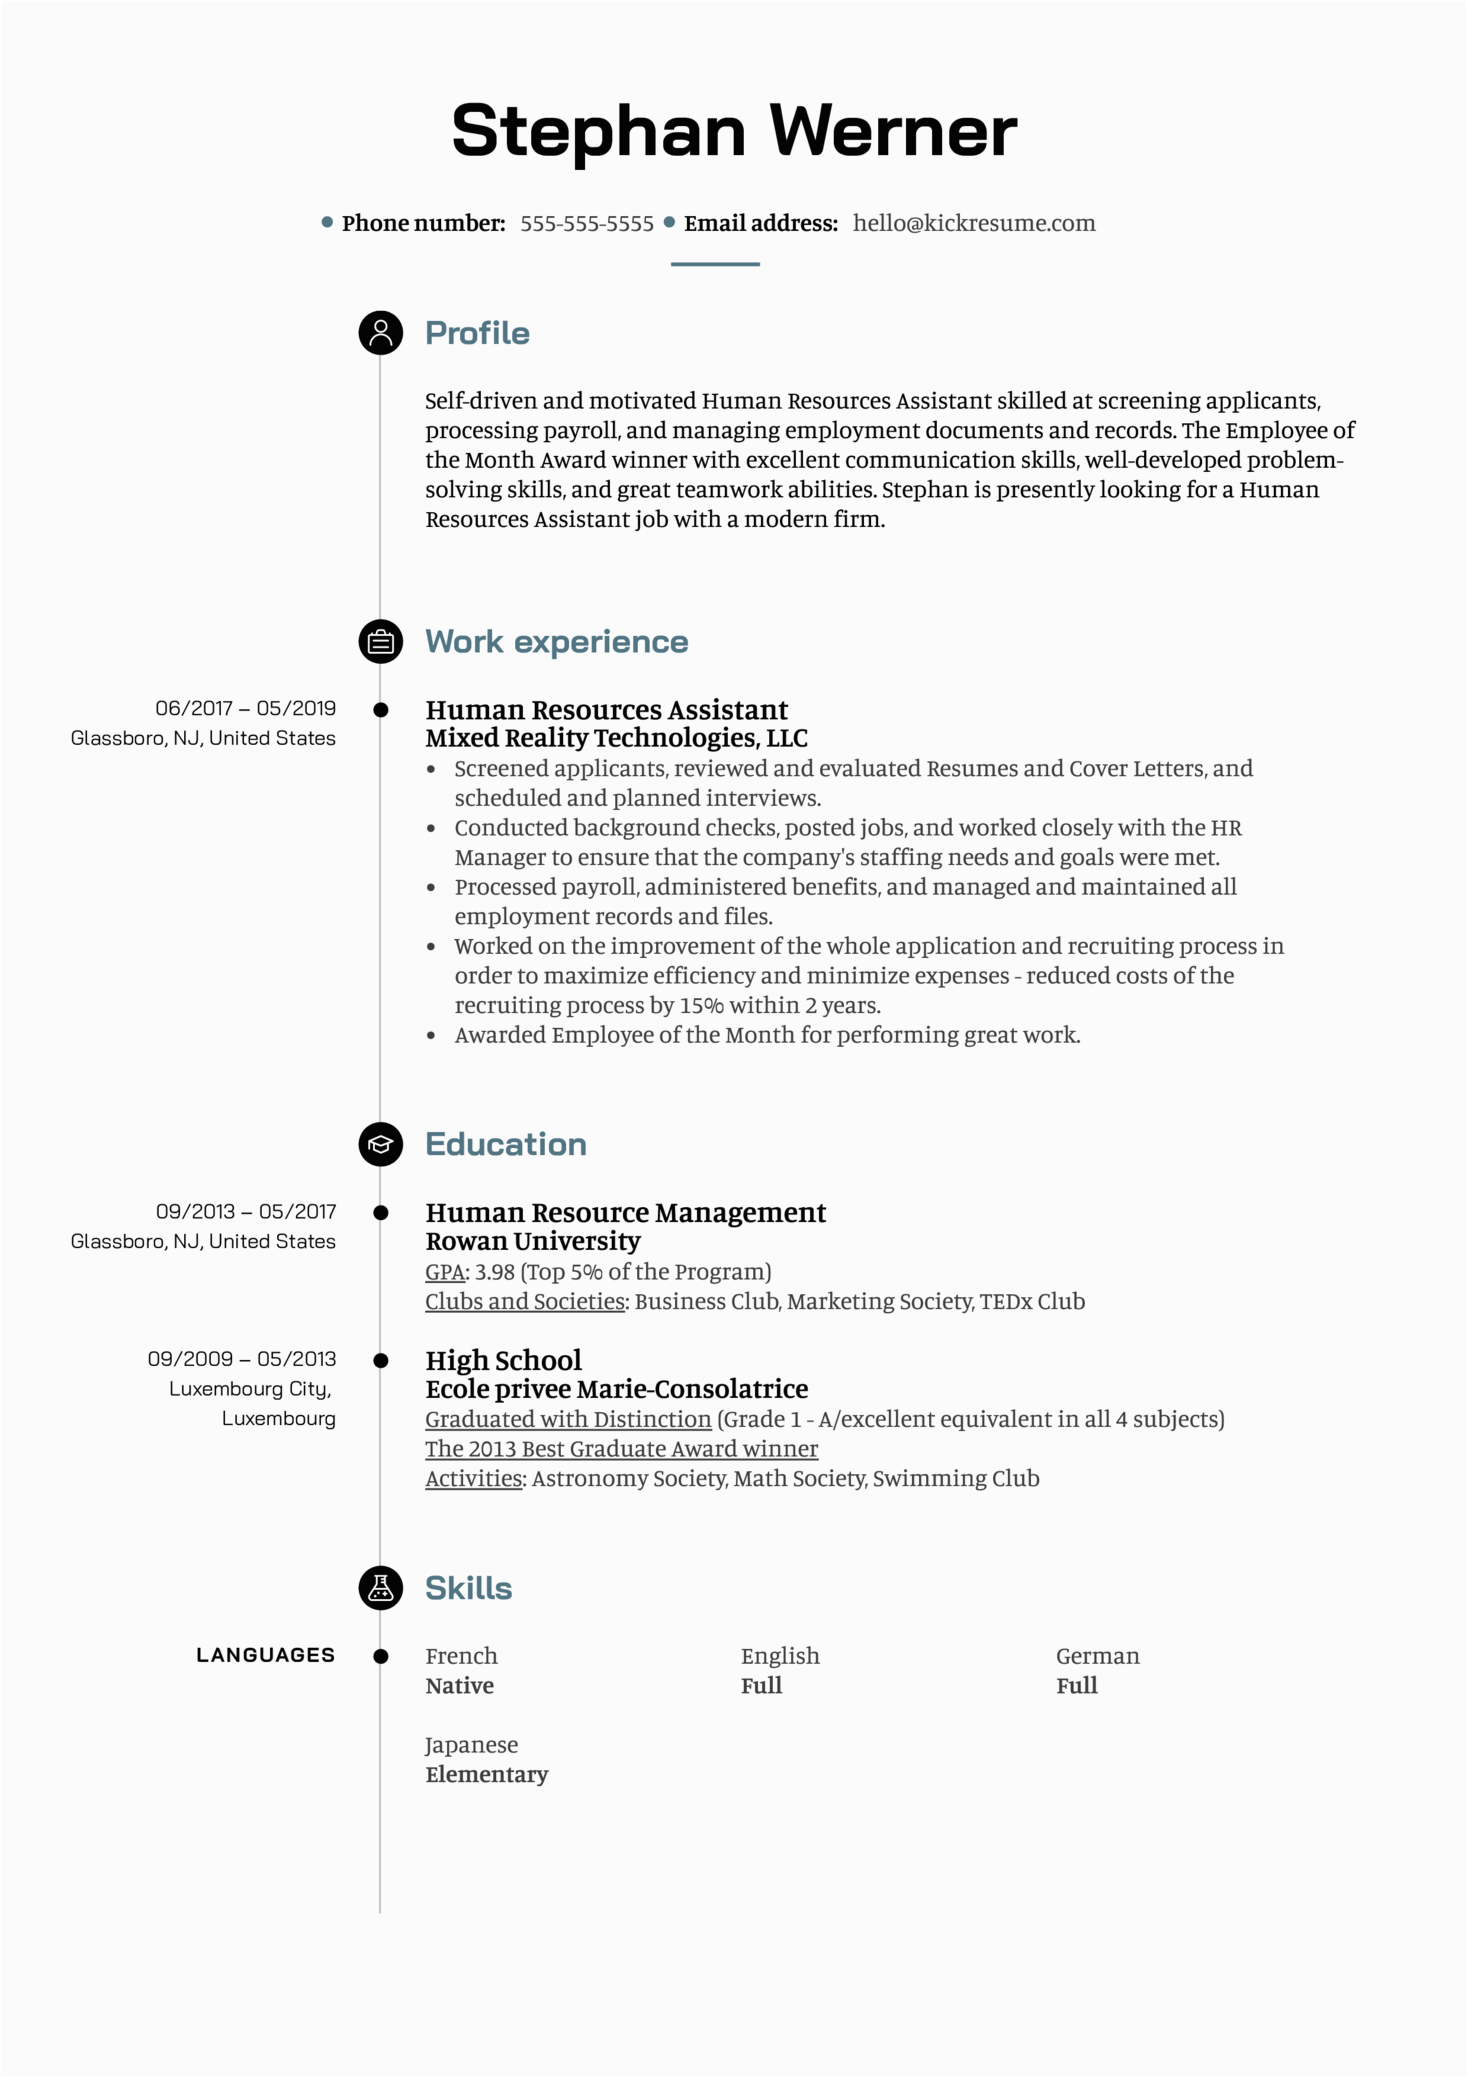 Sample Resume for Career Change to Human Resources Human Resources assistant Resume Example